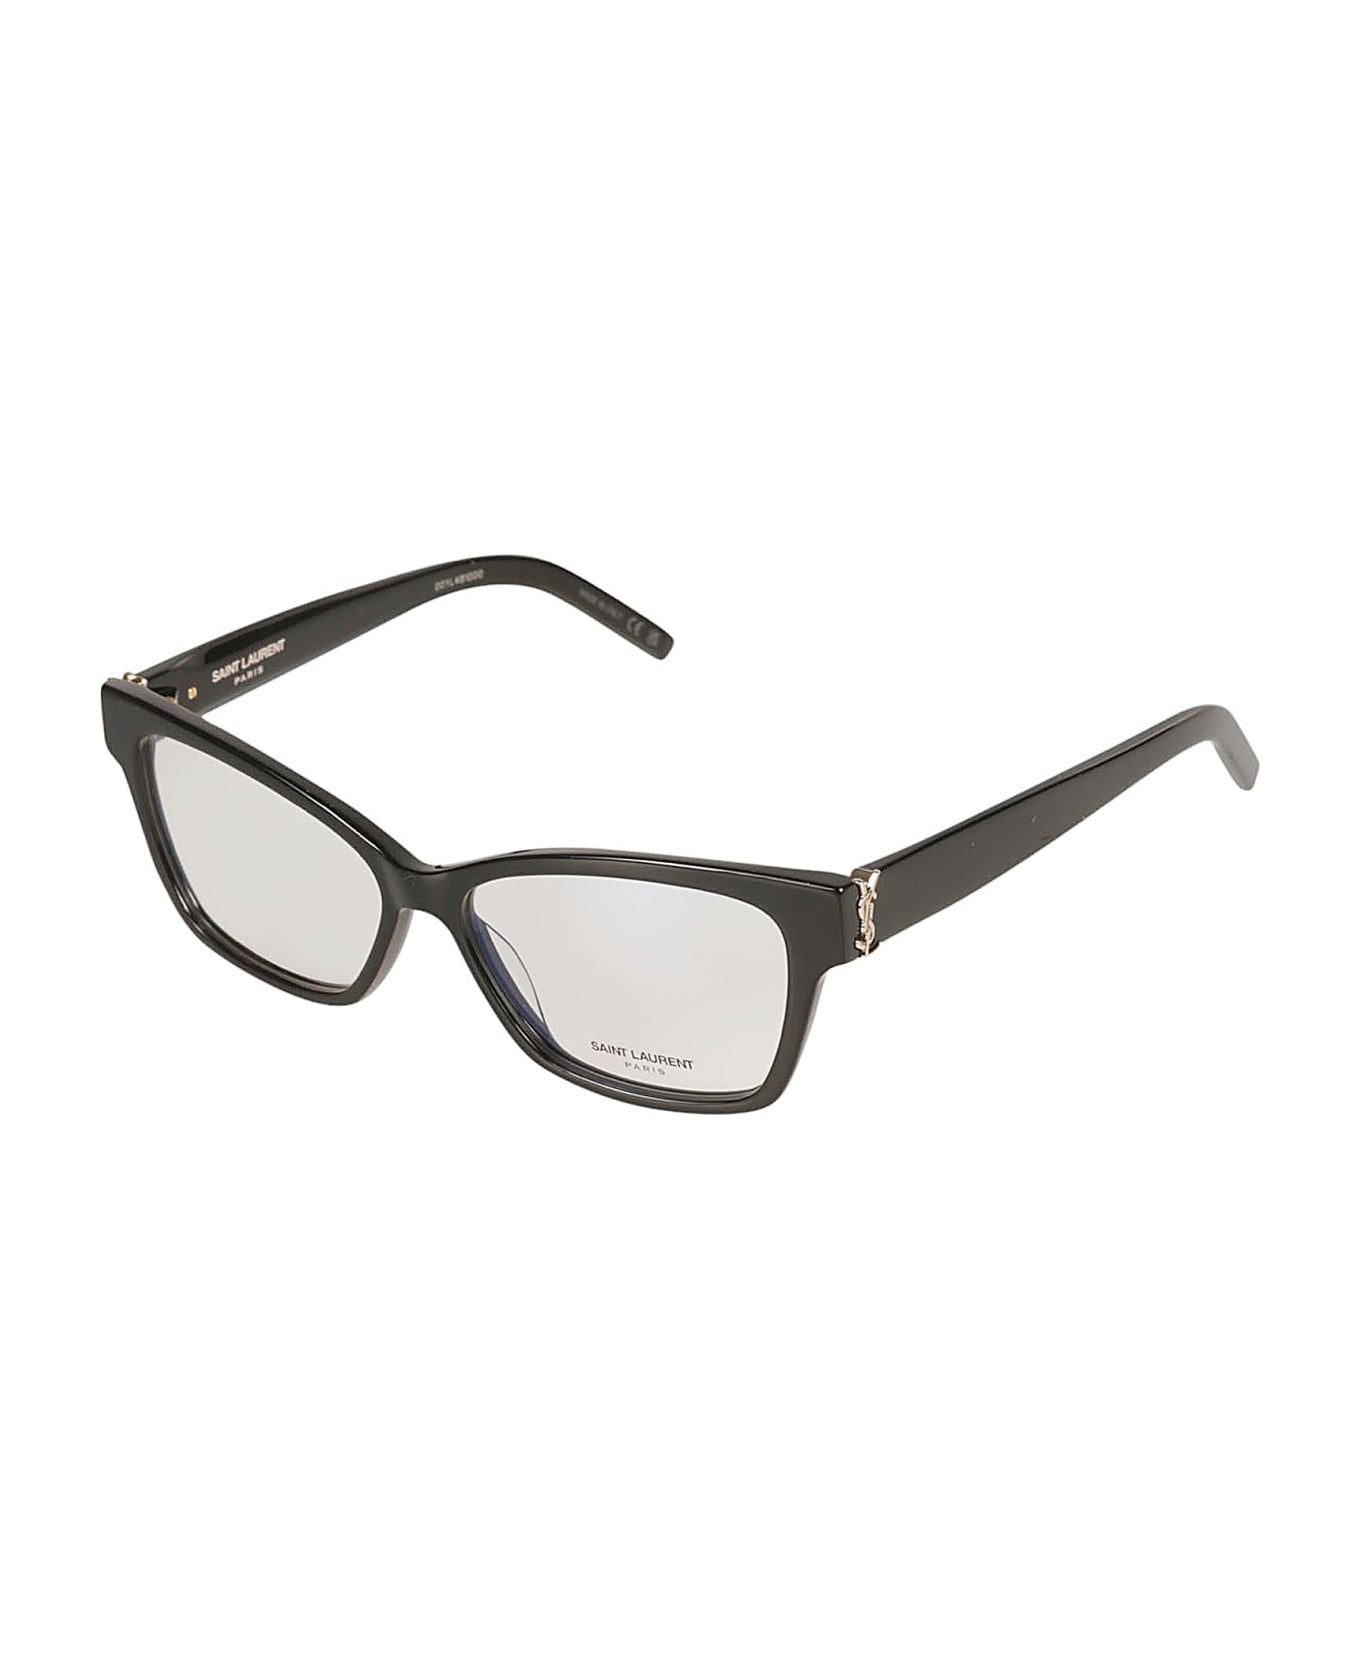 Saint Laurent Eyewear Ysl Hinge Butterfly Frame Glasses - Black/Transparent